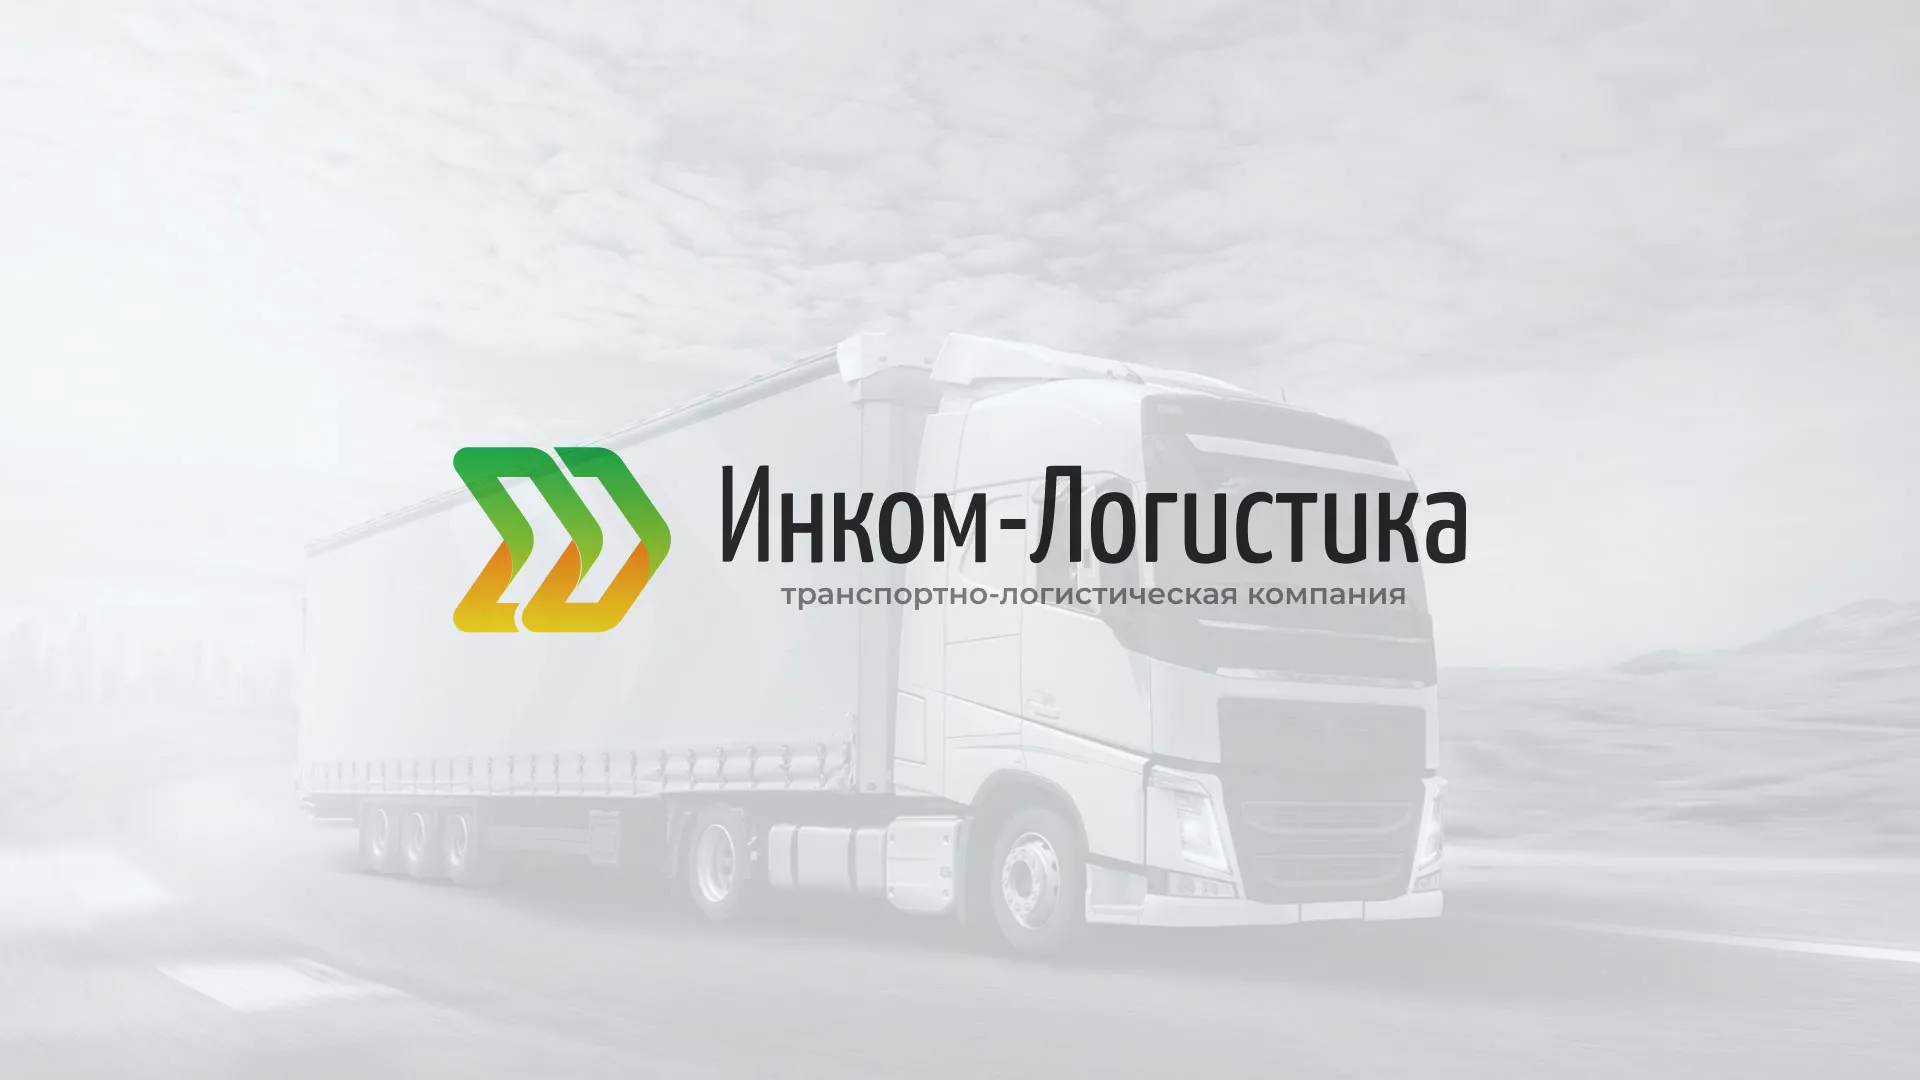 Разработка логотипа и сайта компании «Инком-Логистика» в Гдове